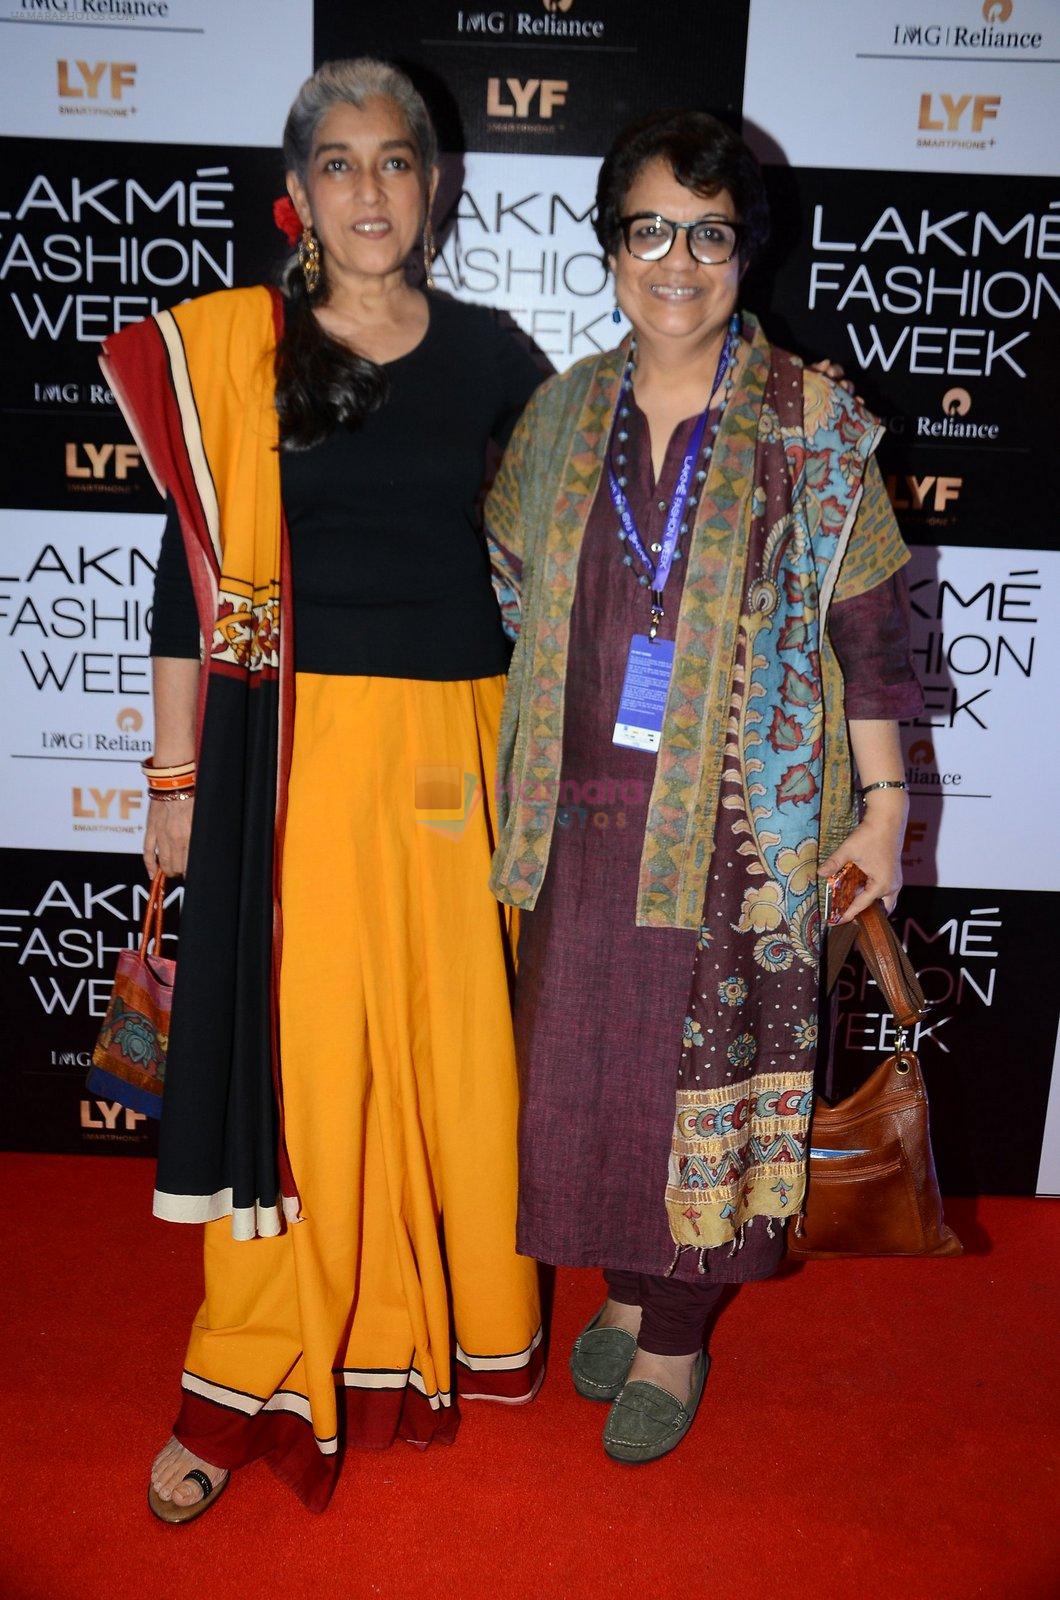 Ratna Pathak Shah at Lakme Fashion Week 2016 Day 2 on 25th Aug 2016